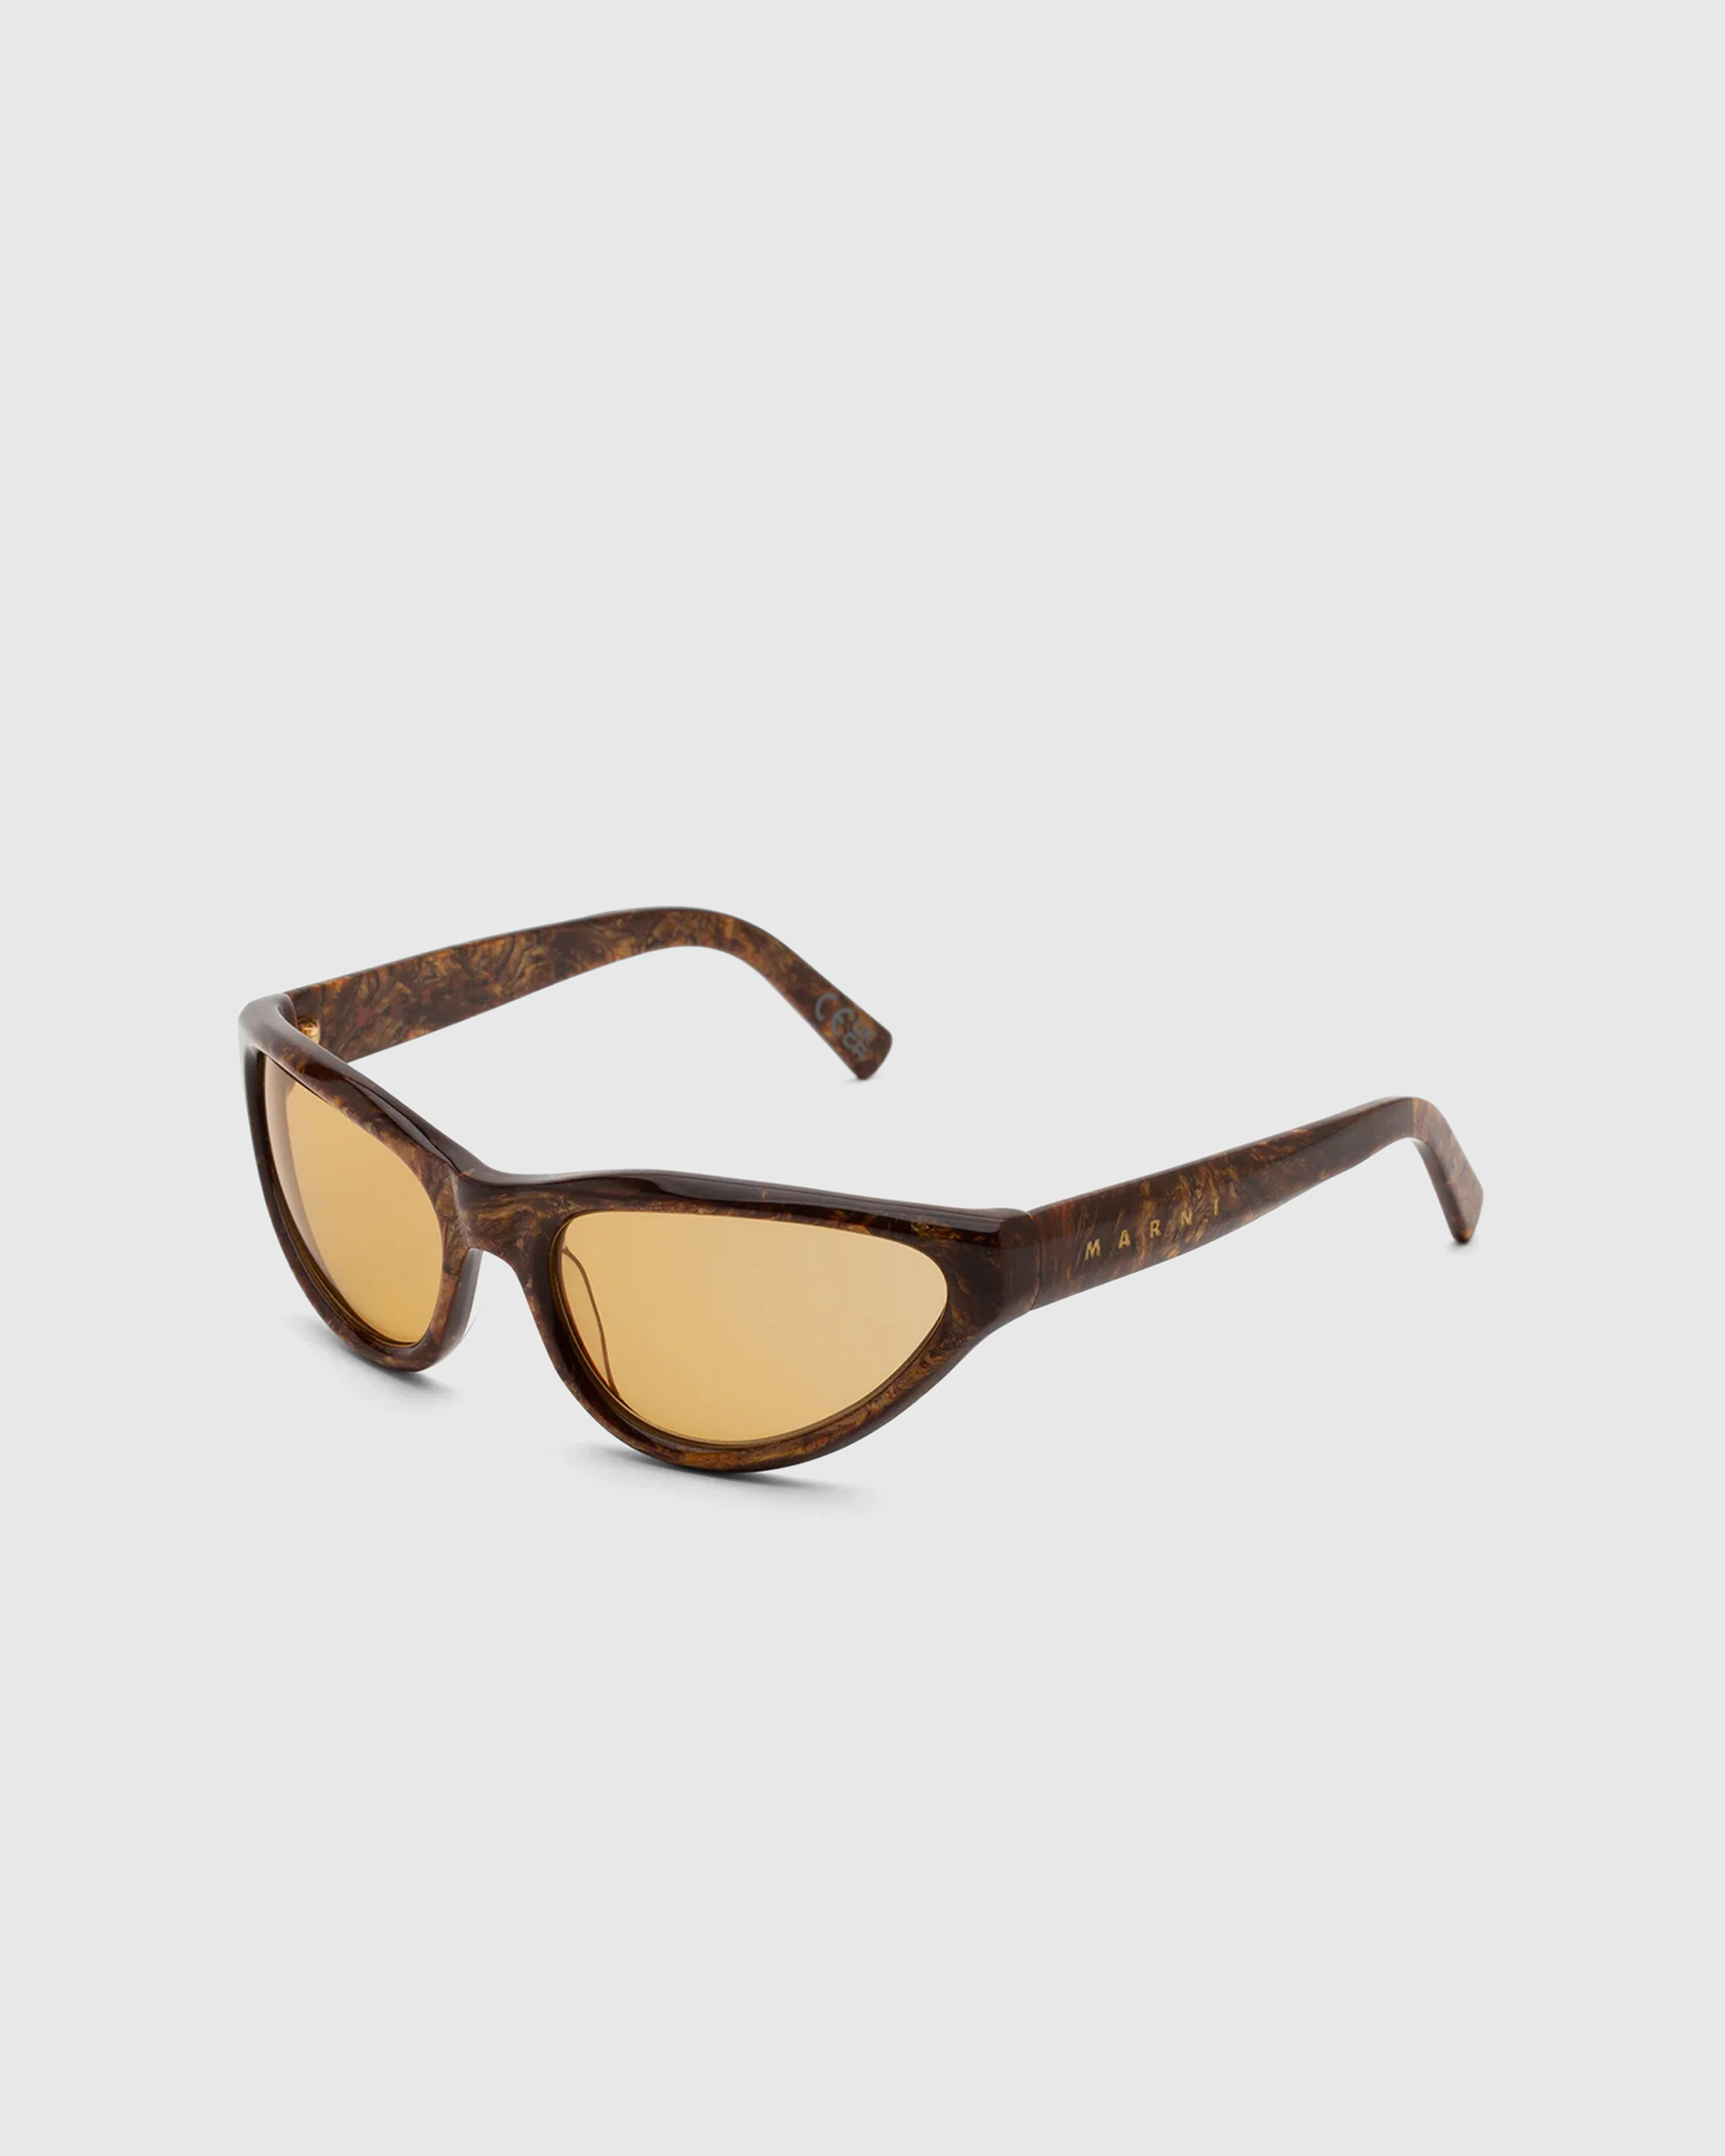 Marni x retrosuperfuture – Mavericks Radica - Sunglasses - Brown - Image 3